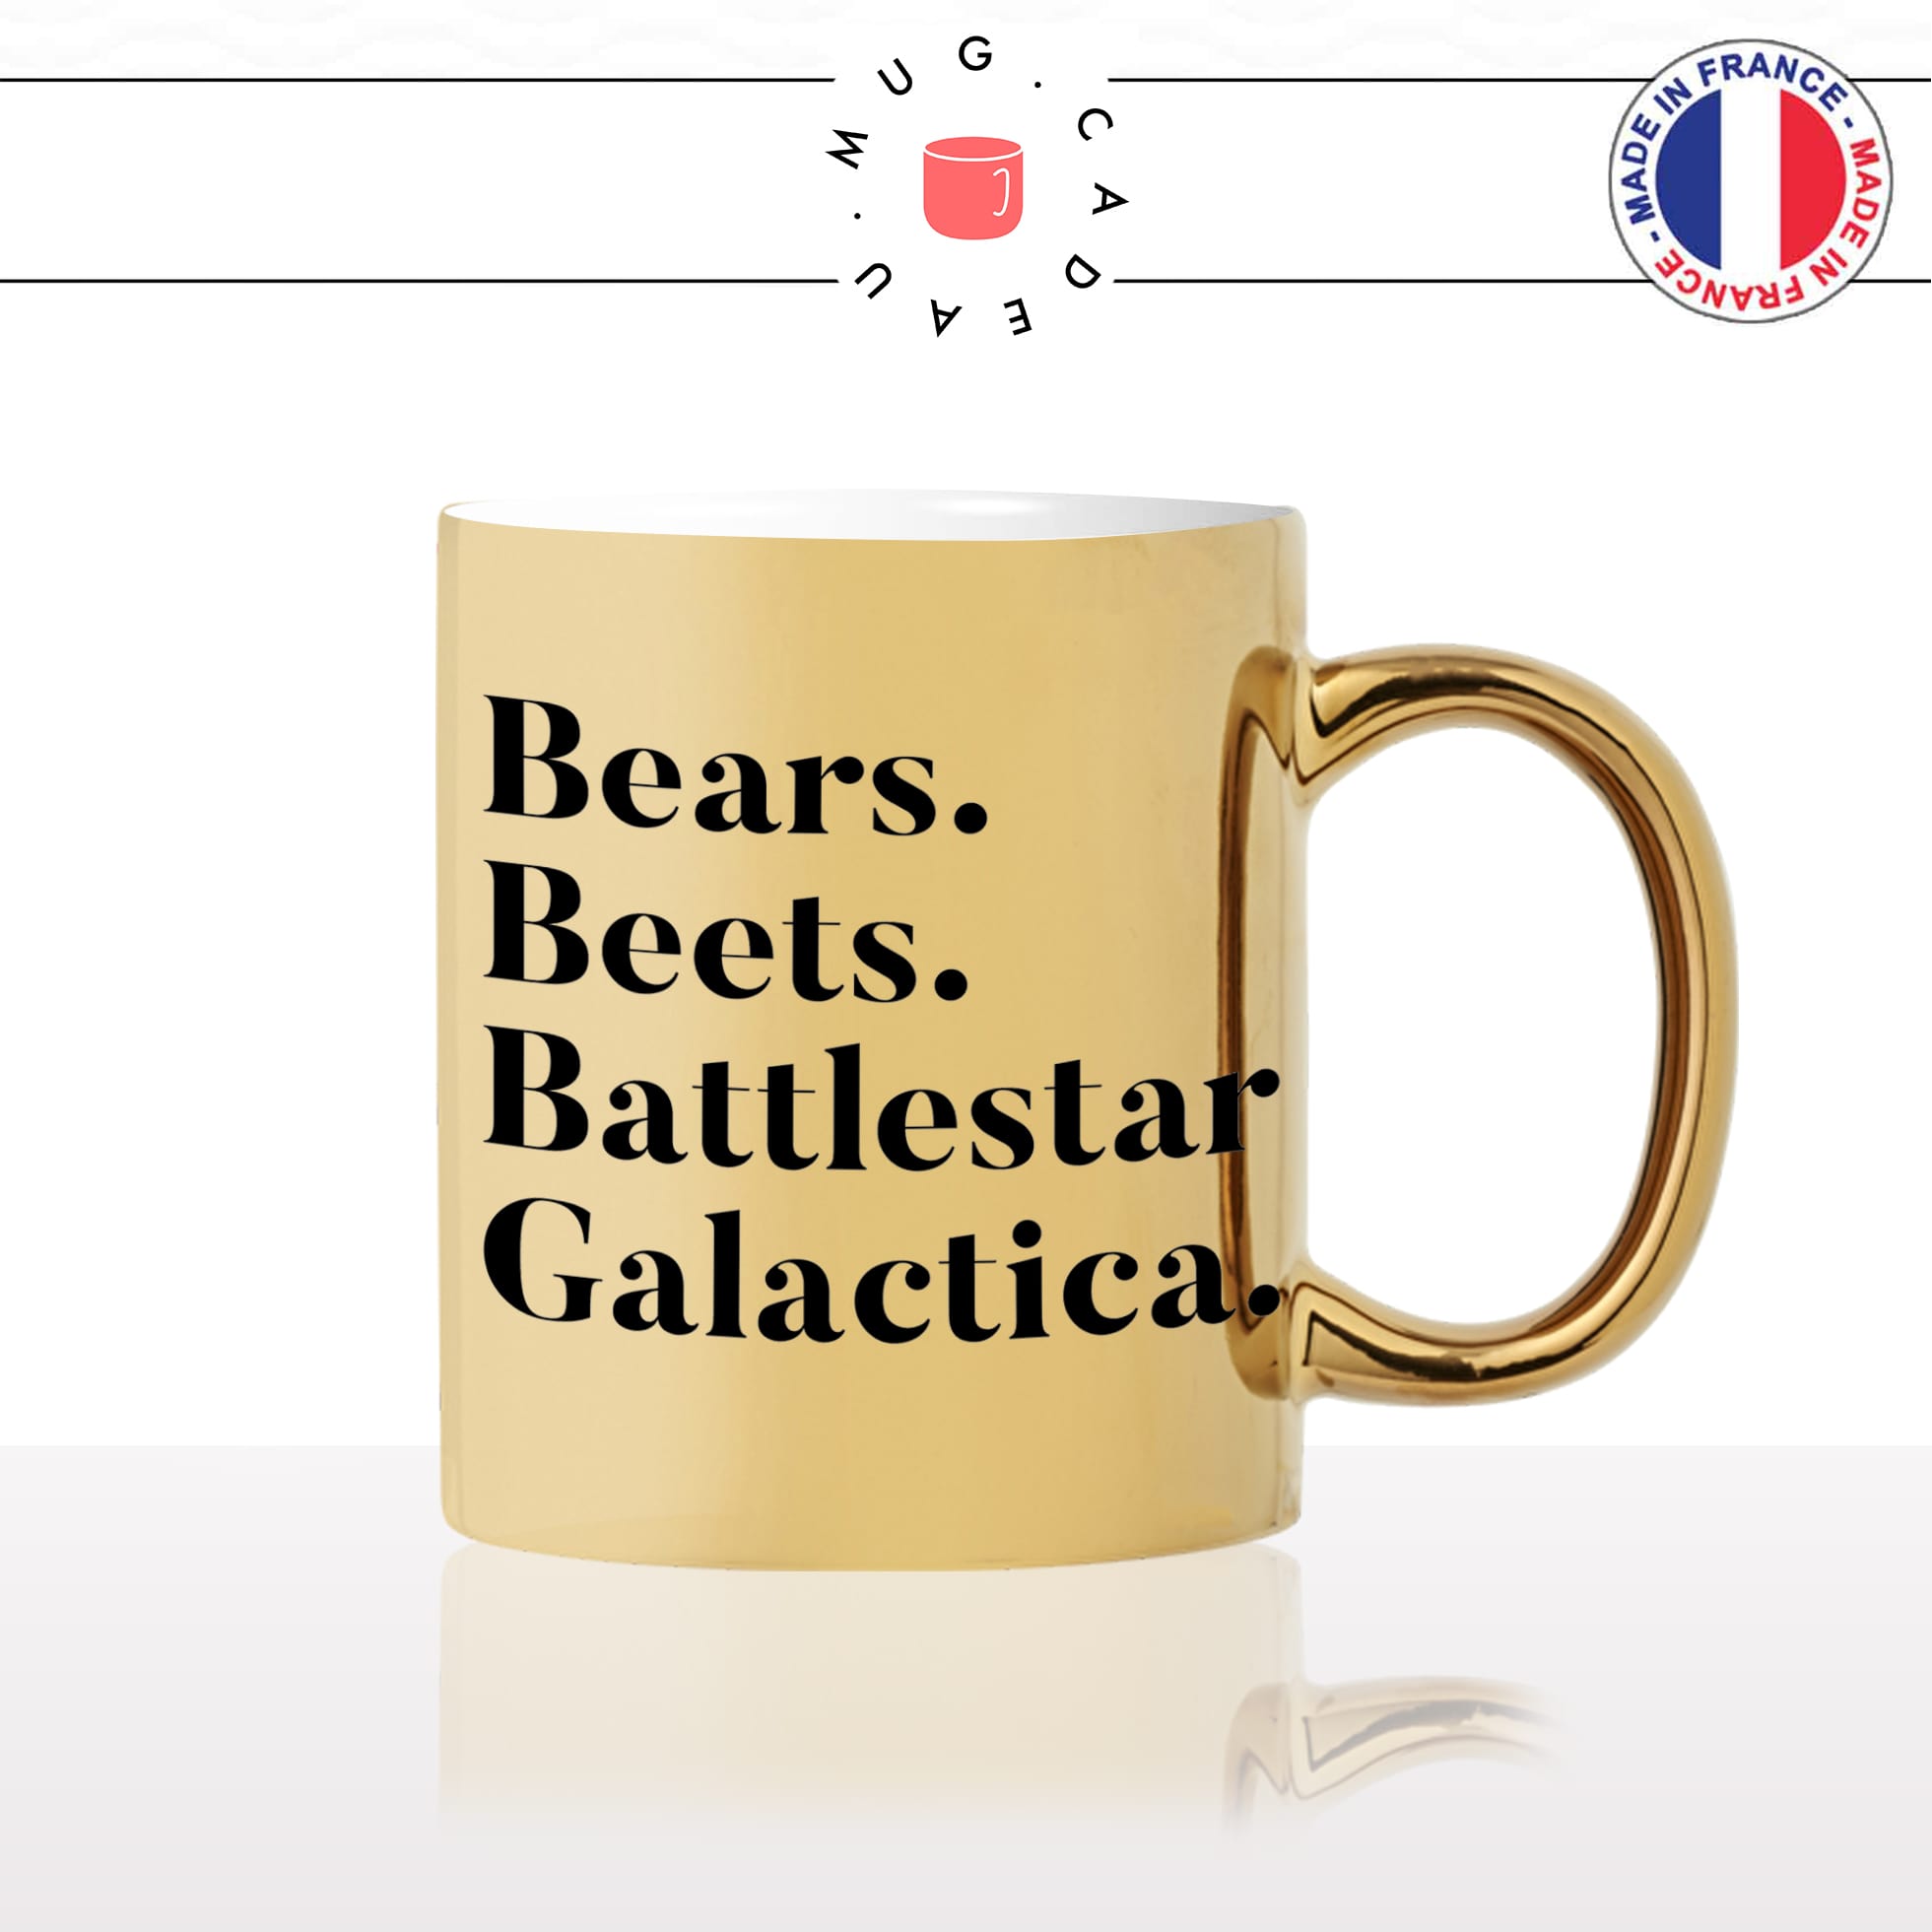 mug-tasse-doré-or-gold-série-culte-the-office-dwight-schrute-jim-halpert-bears-beets-battlestar-humour-fun-idée-cadeau-personnalisé-café-thé2-min